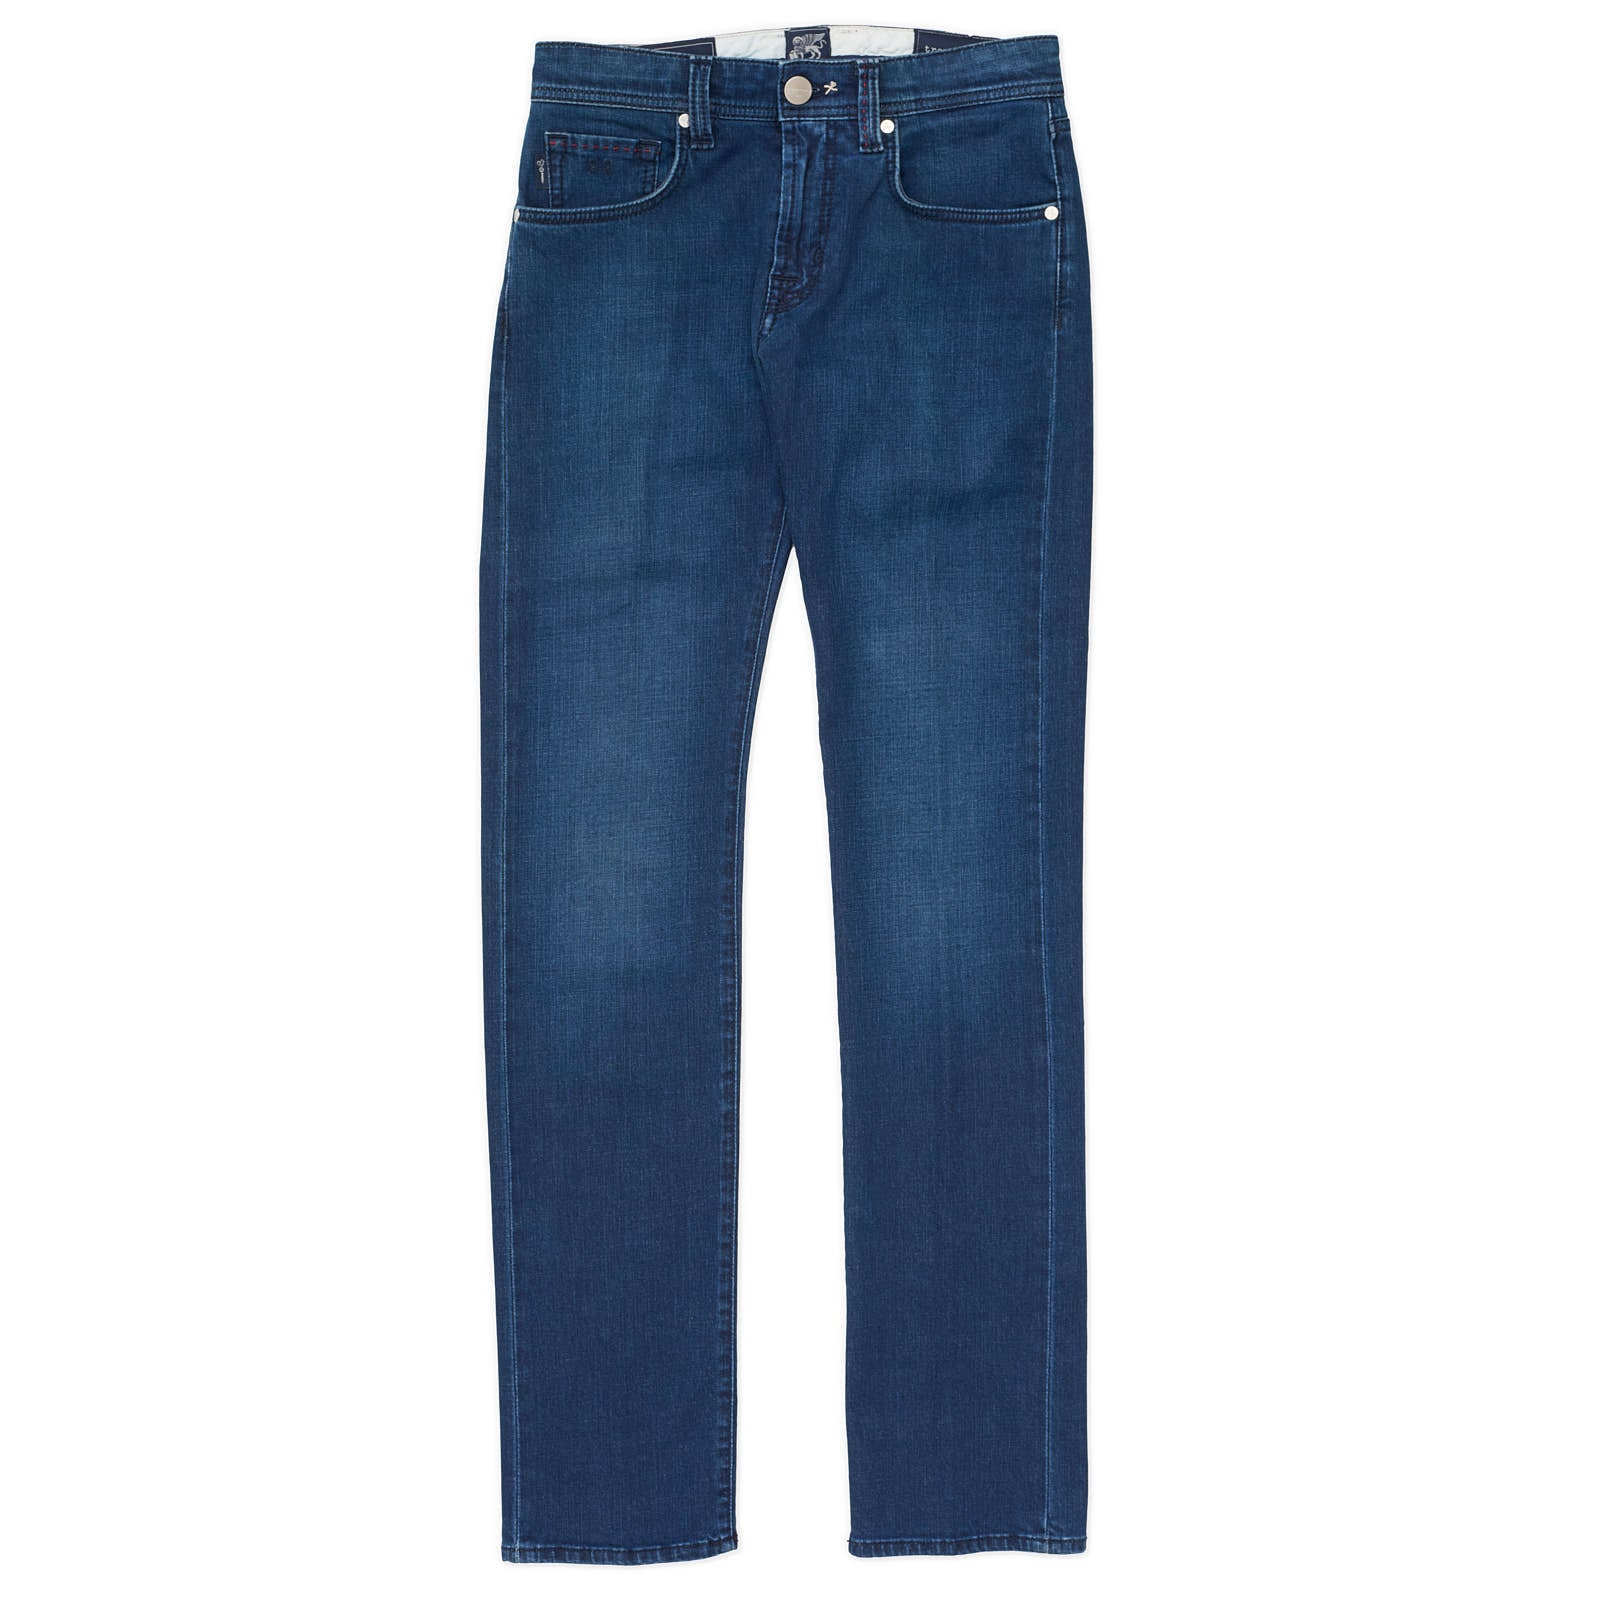 TRAMAROSSA Michelangelo Blue Cotton Stertch Slim Fit Jeans Pants NEW